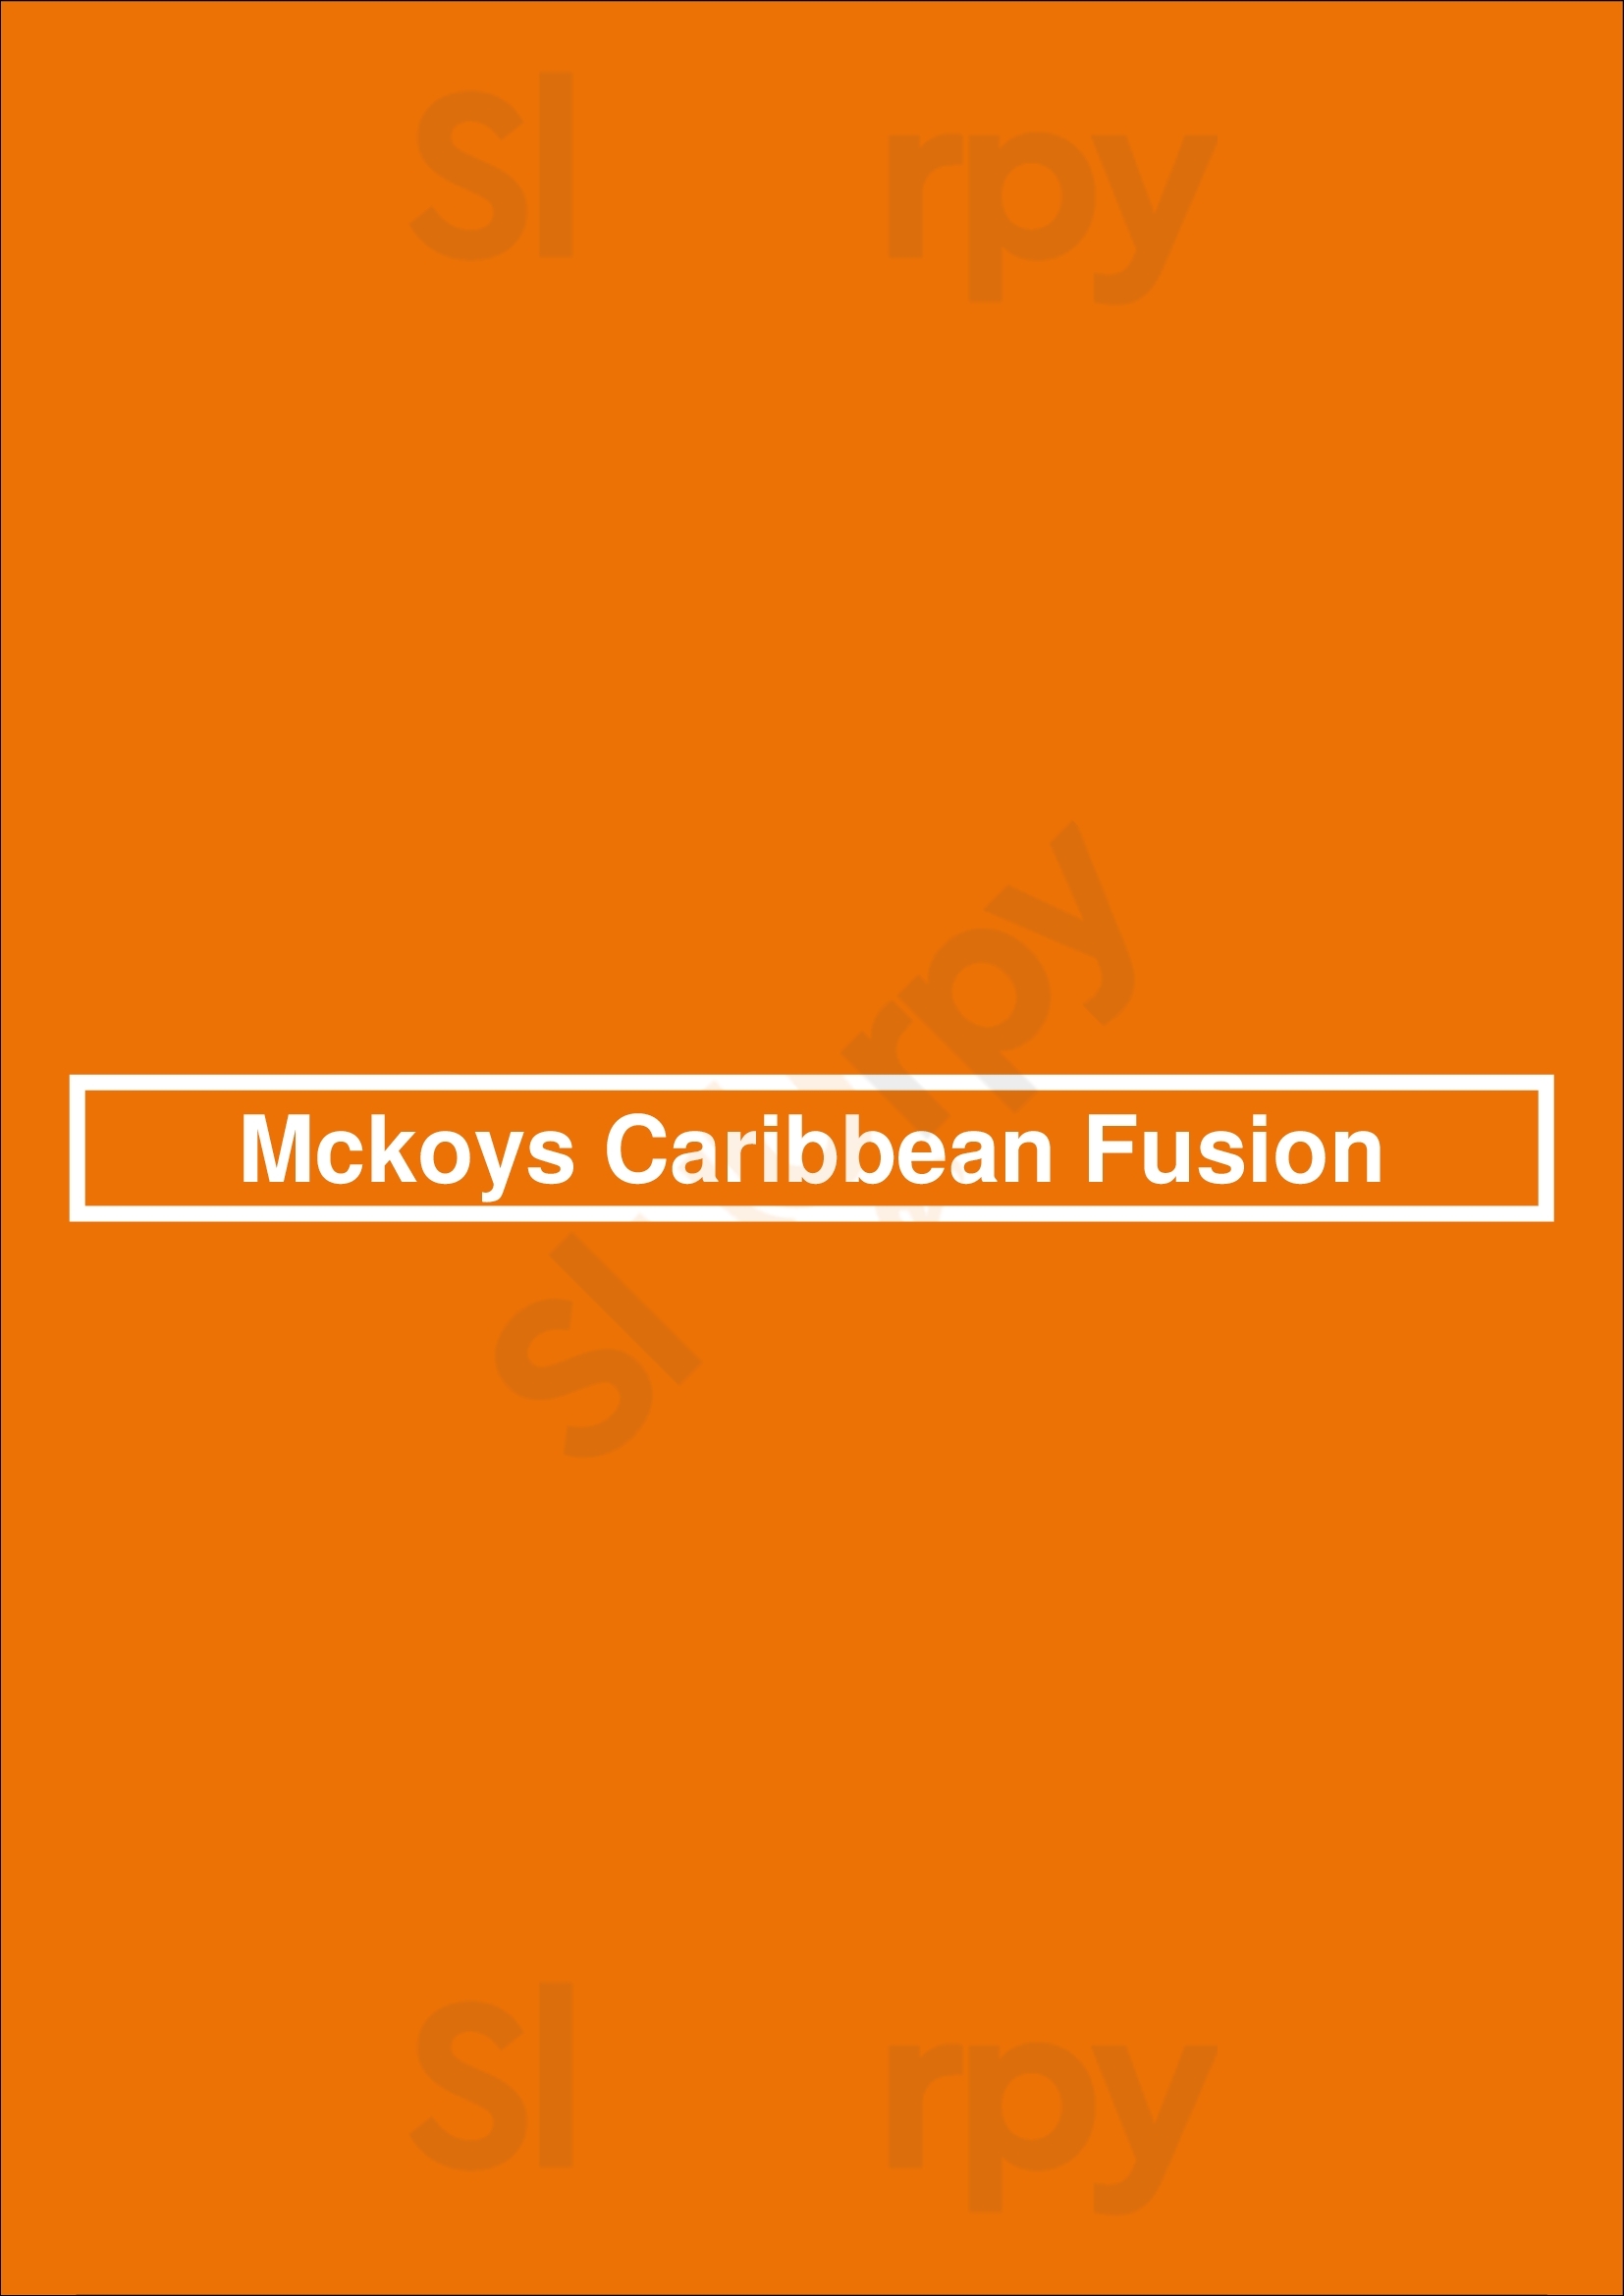 Mckoys Caribbean Fusion Mississauga Menu - 1